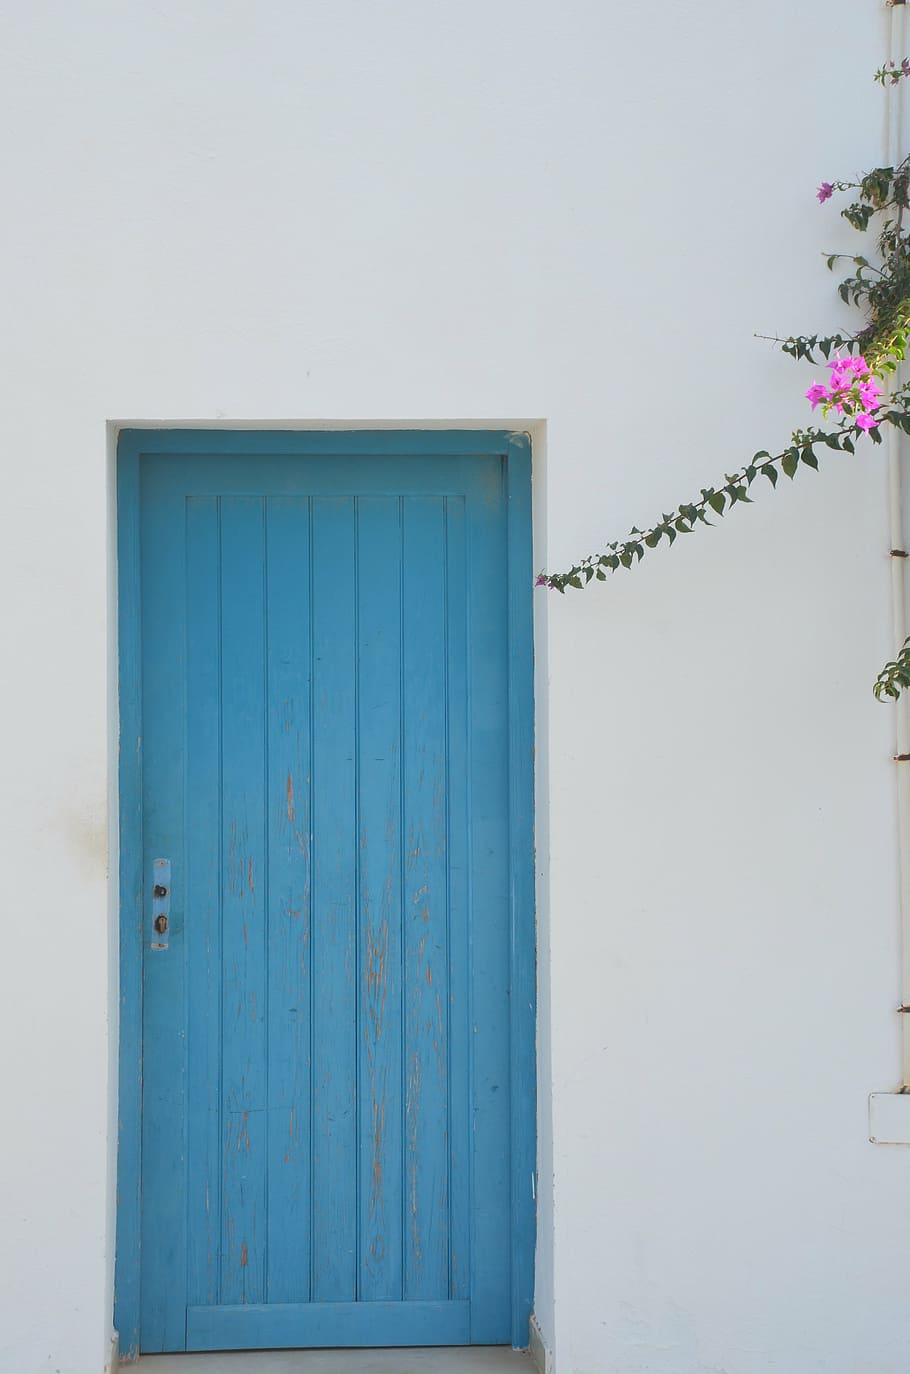 cerrado, azul, de madera, puerta, azul blanco, grecia, hogar, blanco, flor, arquitectura